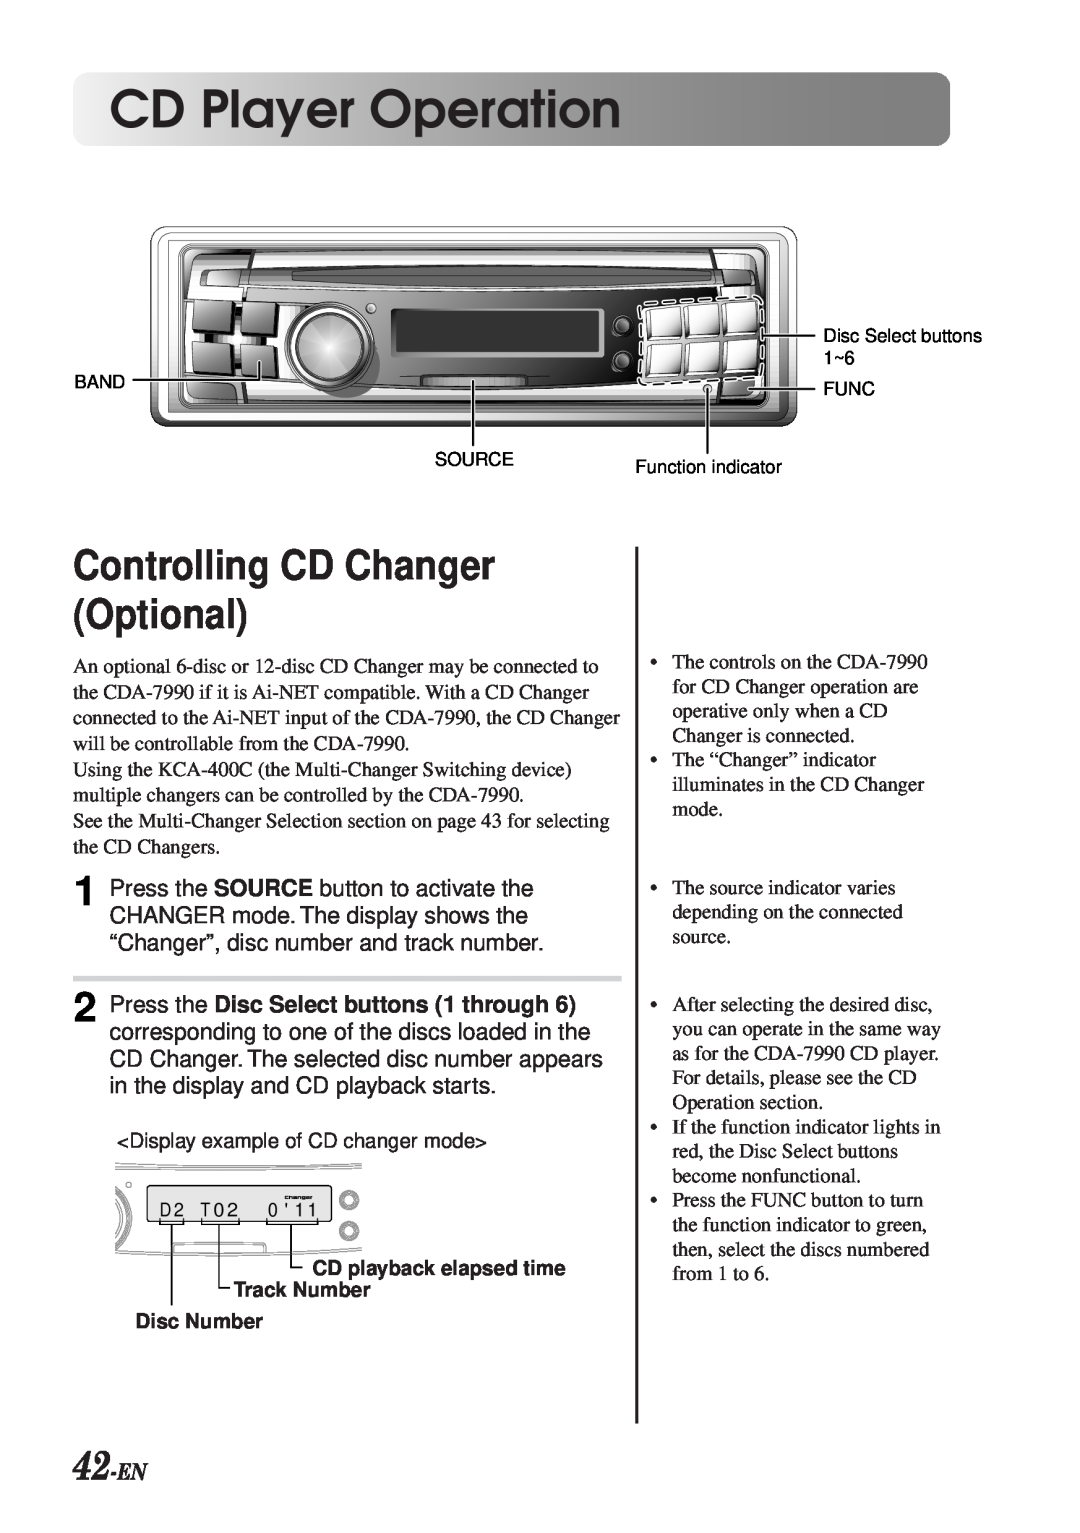 Alpine CDA-7990 manual Controlling CD Changer Optional, 42-EN, CD Player Operation 